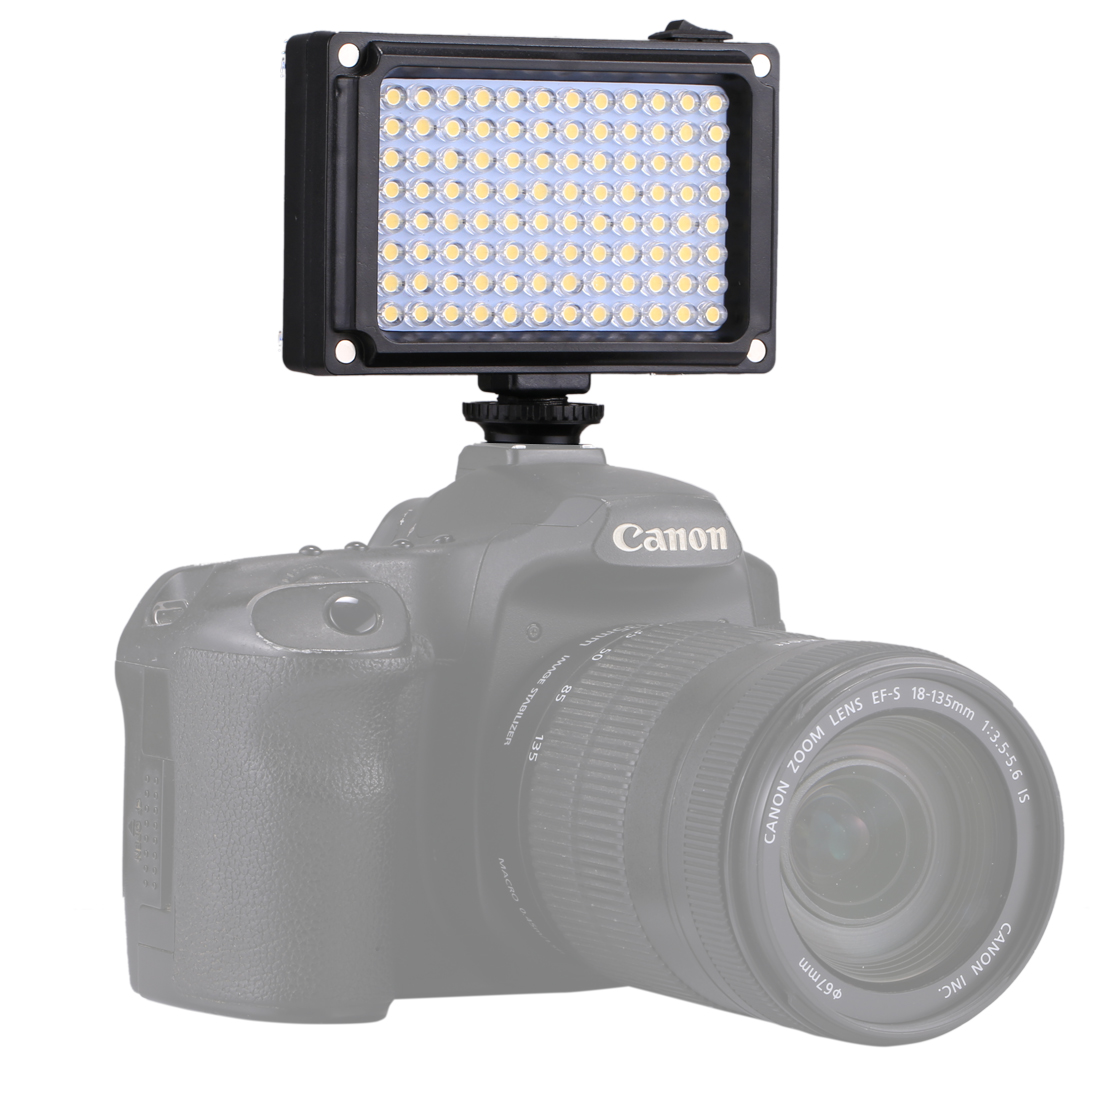 

PULUZ PU4096 Pocket 96 LEDs 860LM Pro Photography Video Light Studio Light for DSLR Cameras